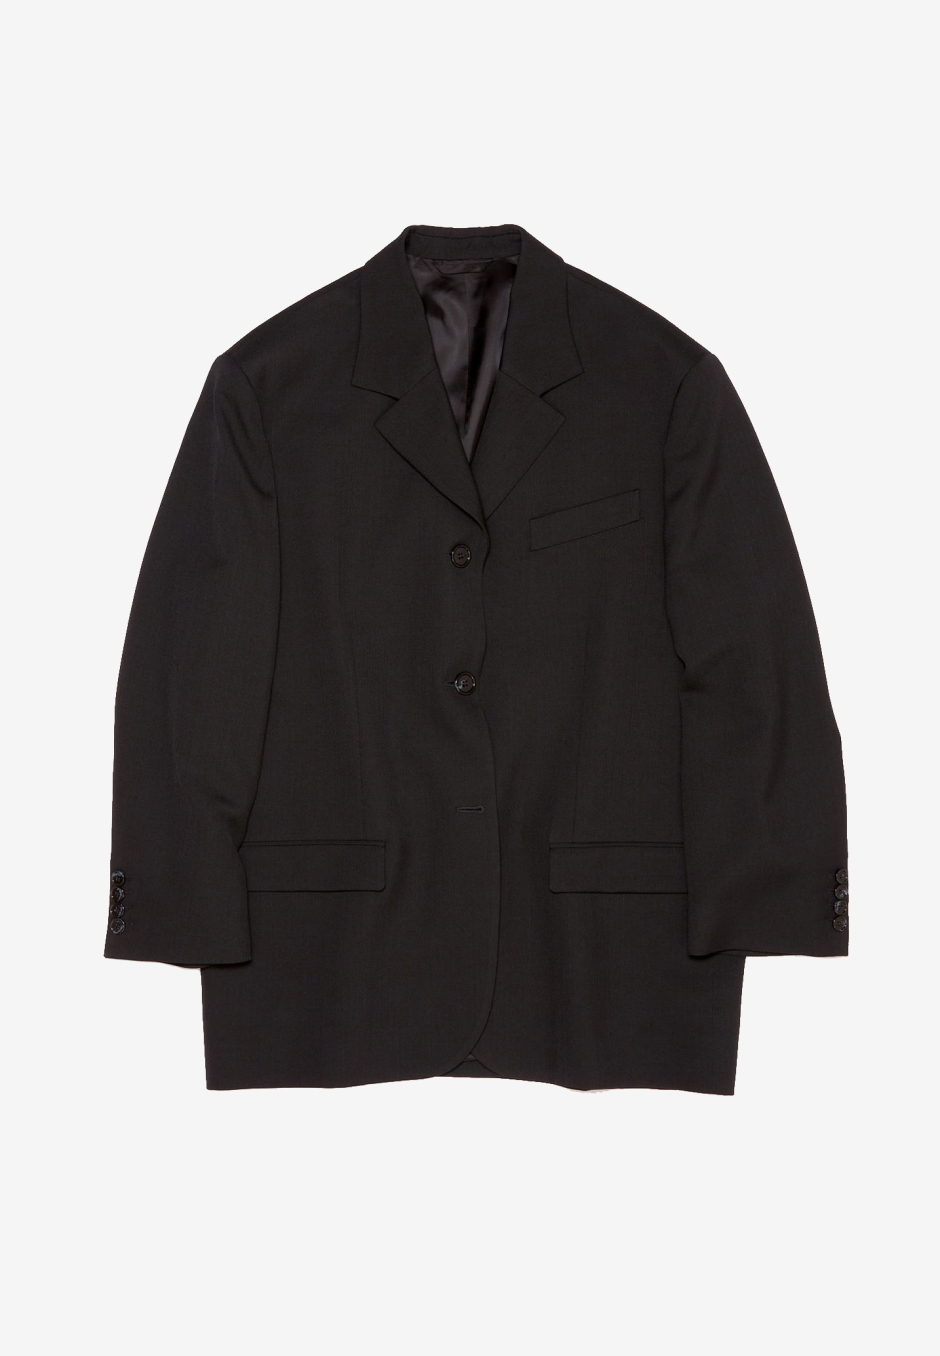 Acne Studios Tailored Suit Jacket